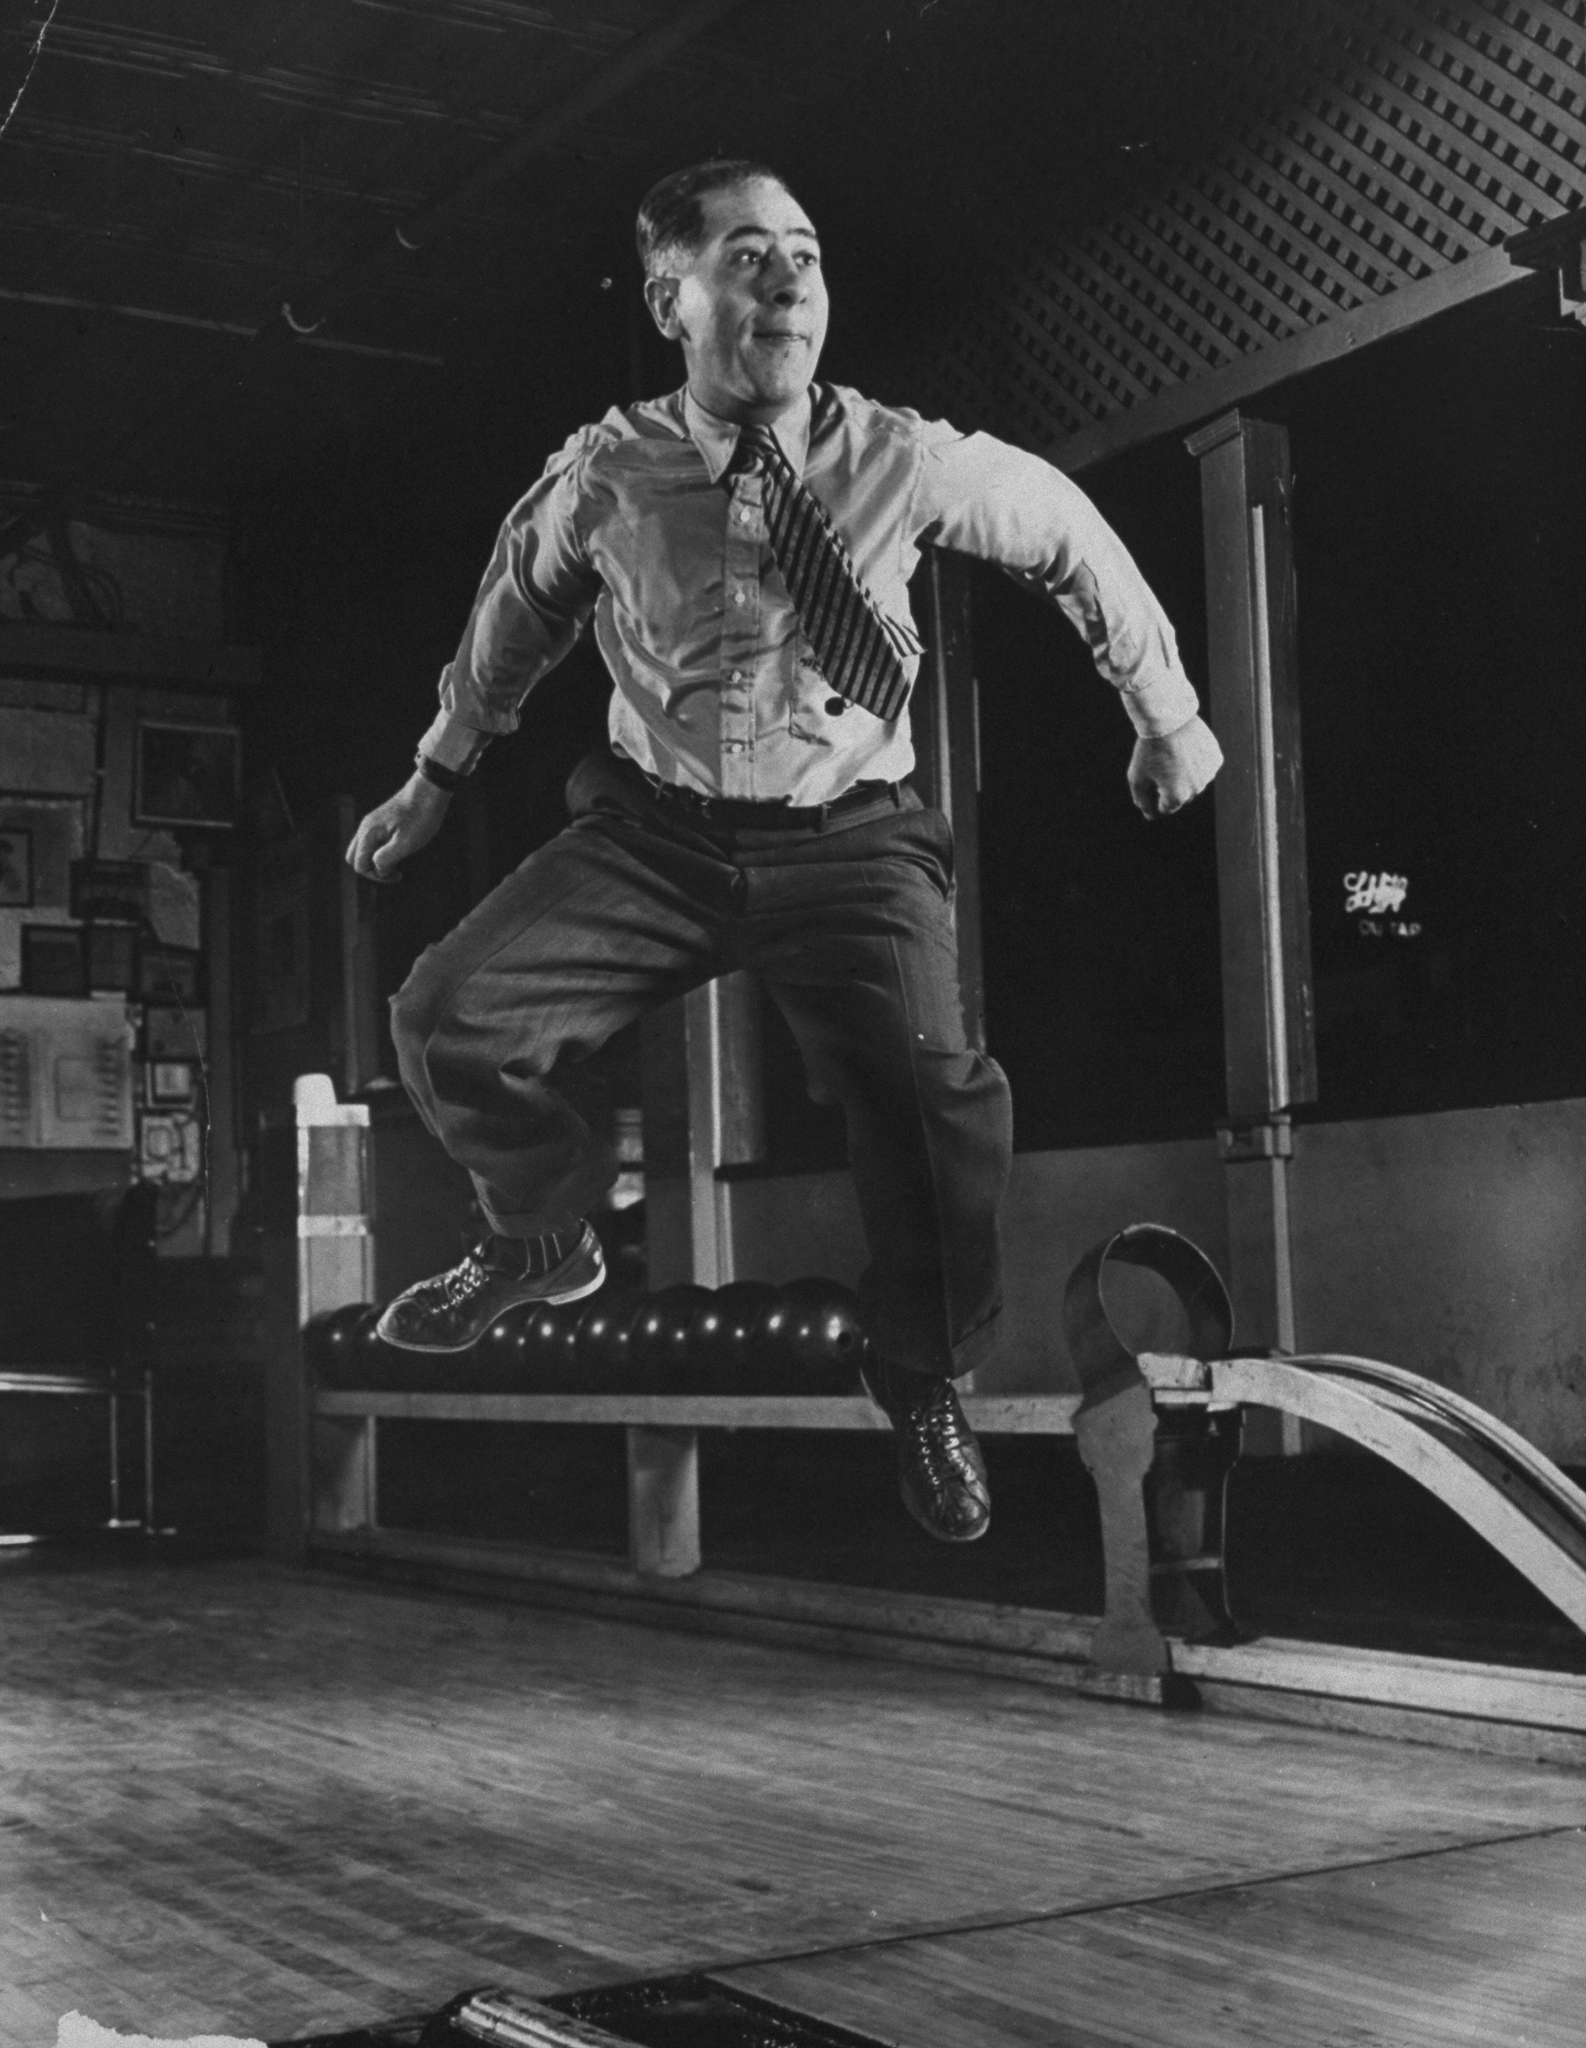 United States Bowling Congress Hall of Famer Joe Falcaro in midair, 1940.